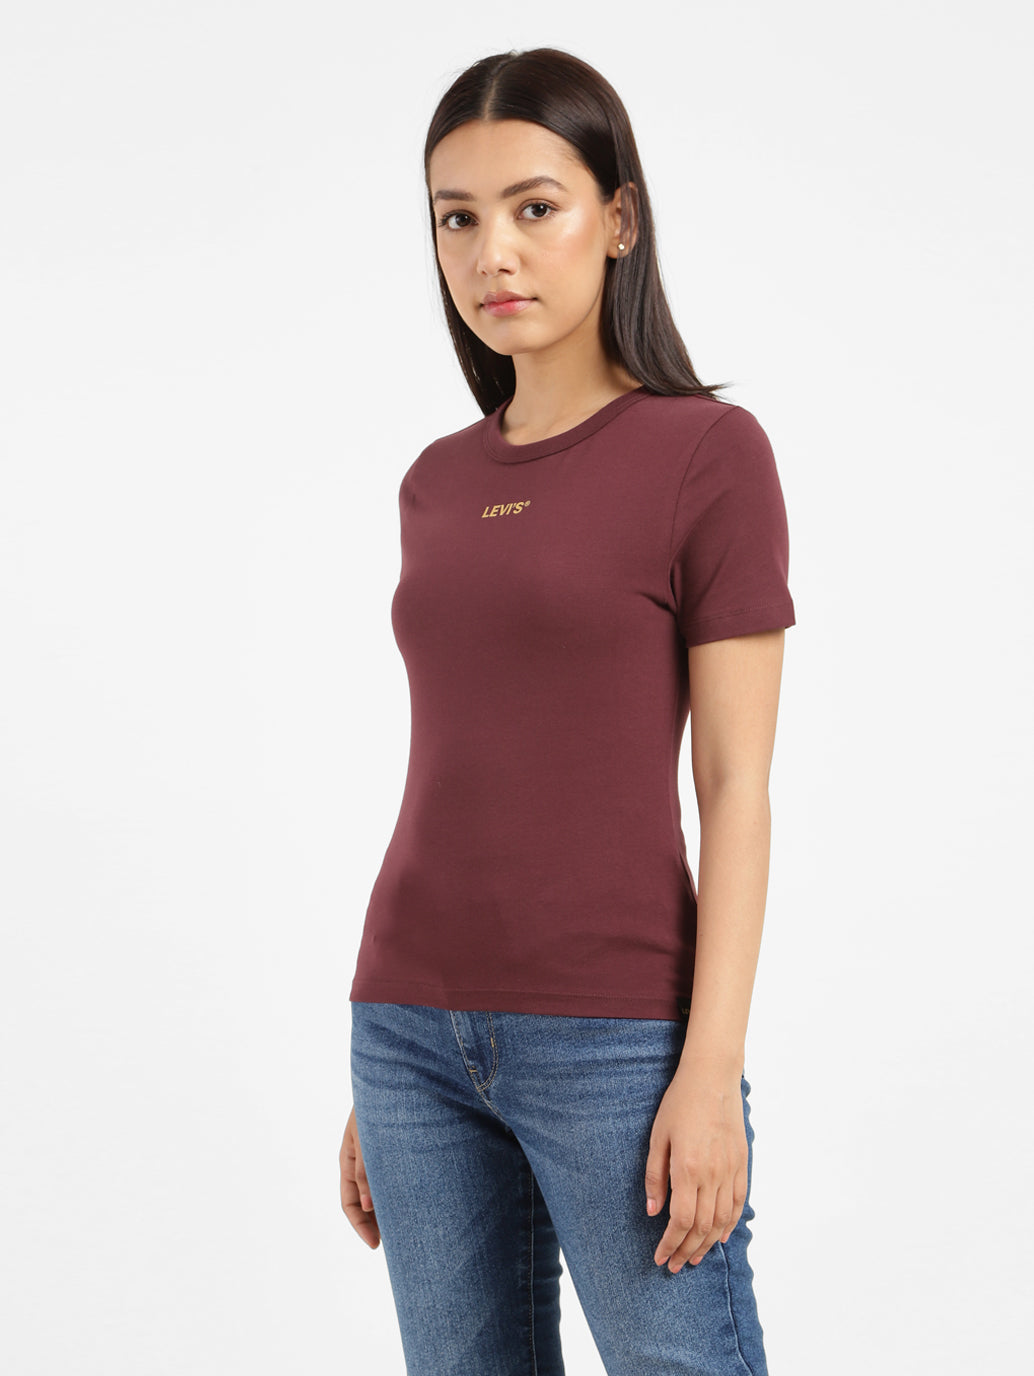 Women's Striped Slim Fit T-shirt